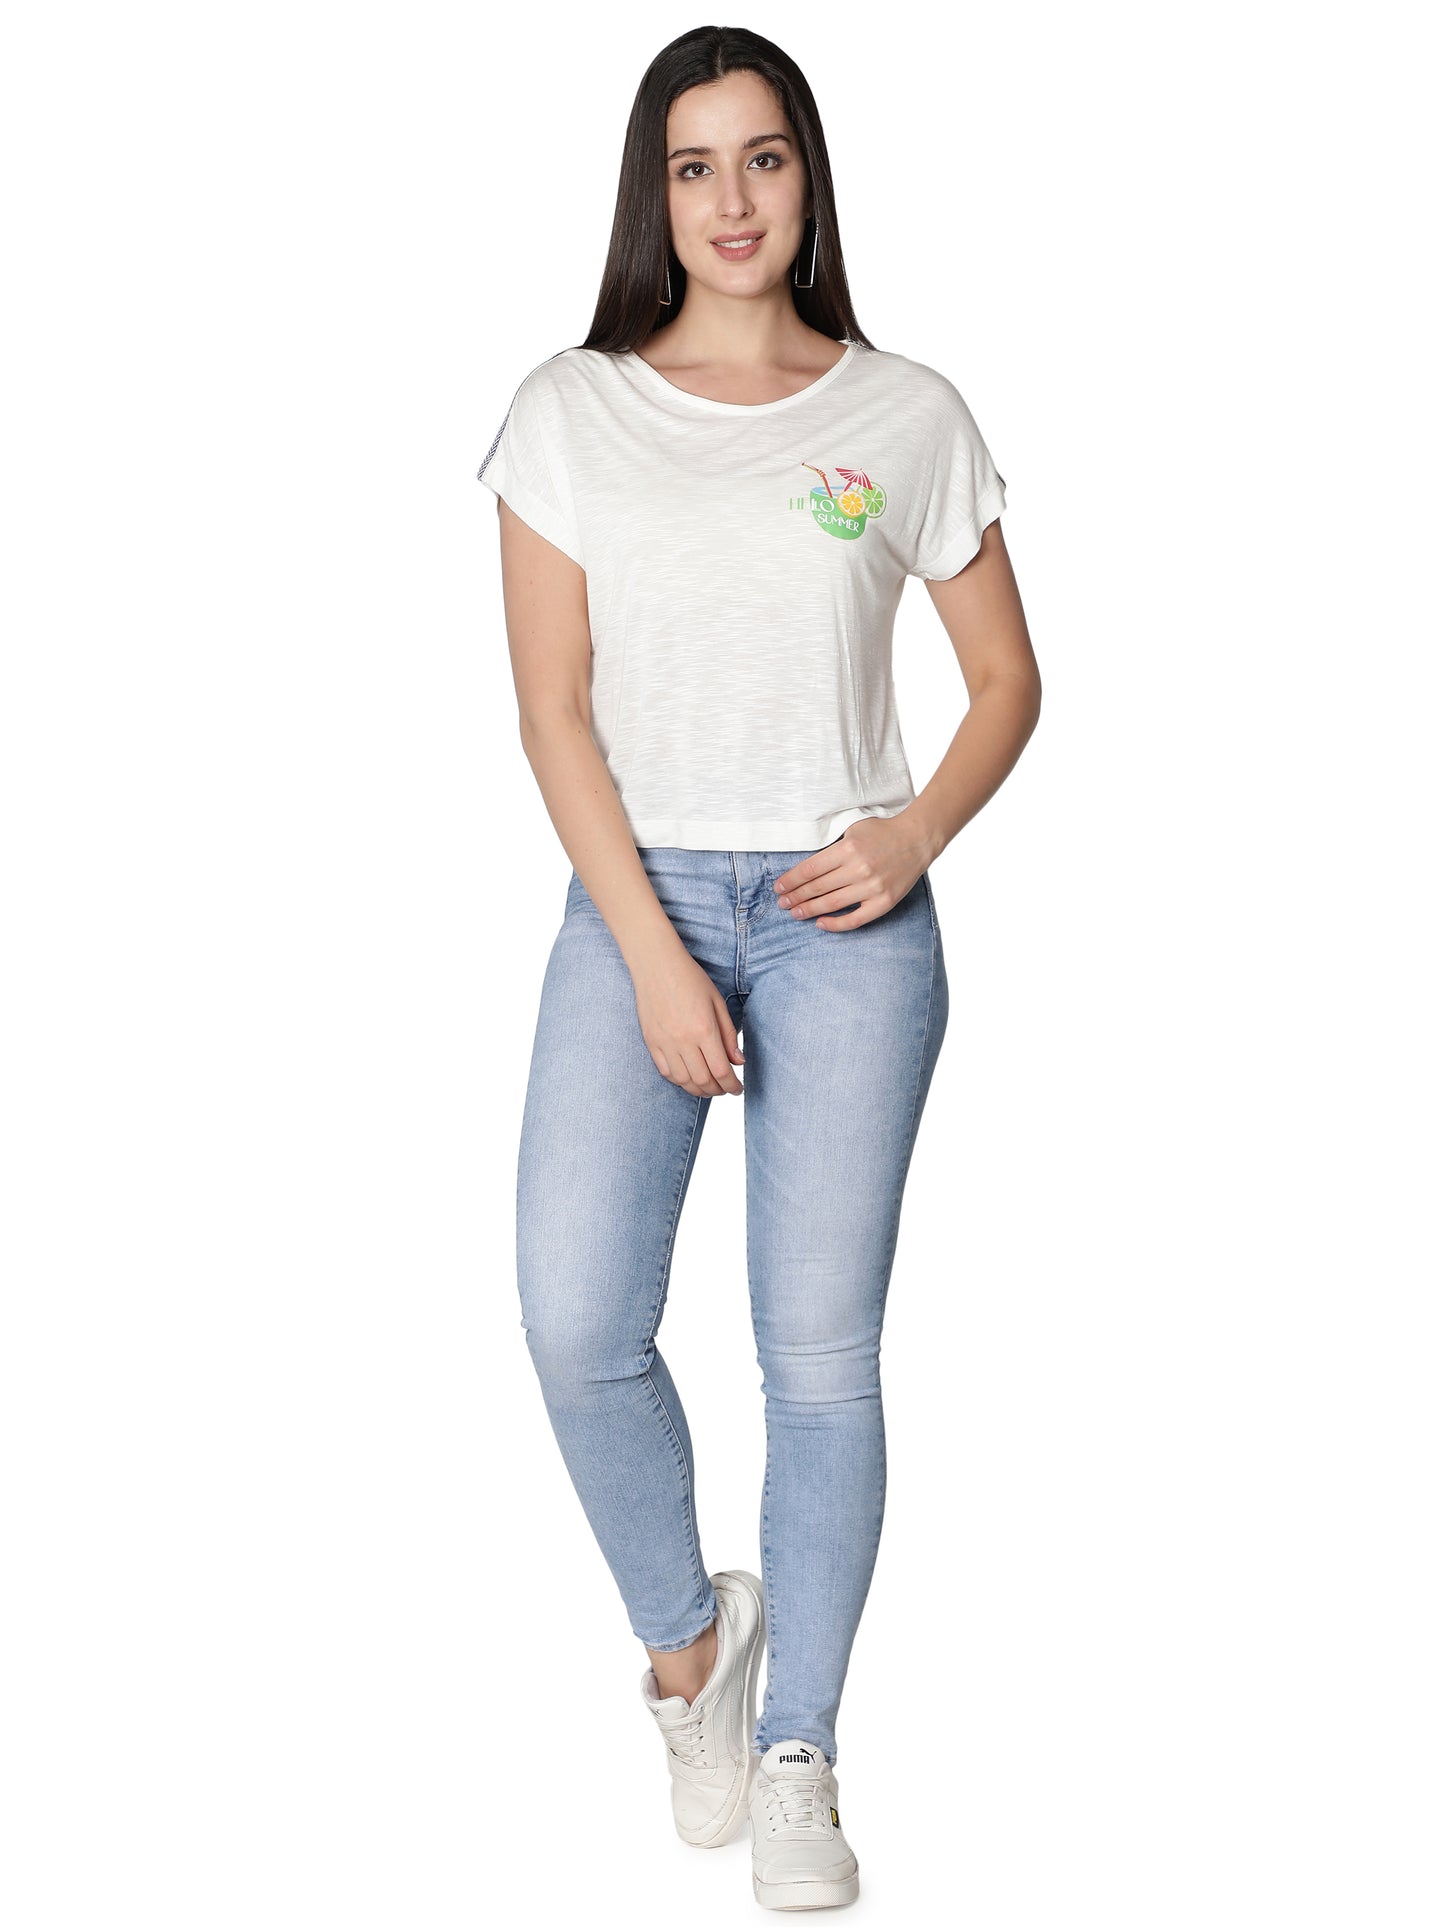 NUEVOSDAMAS Women Rayon Printed White T-Shirt/Top